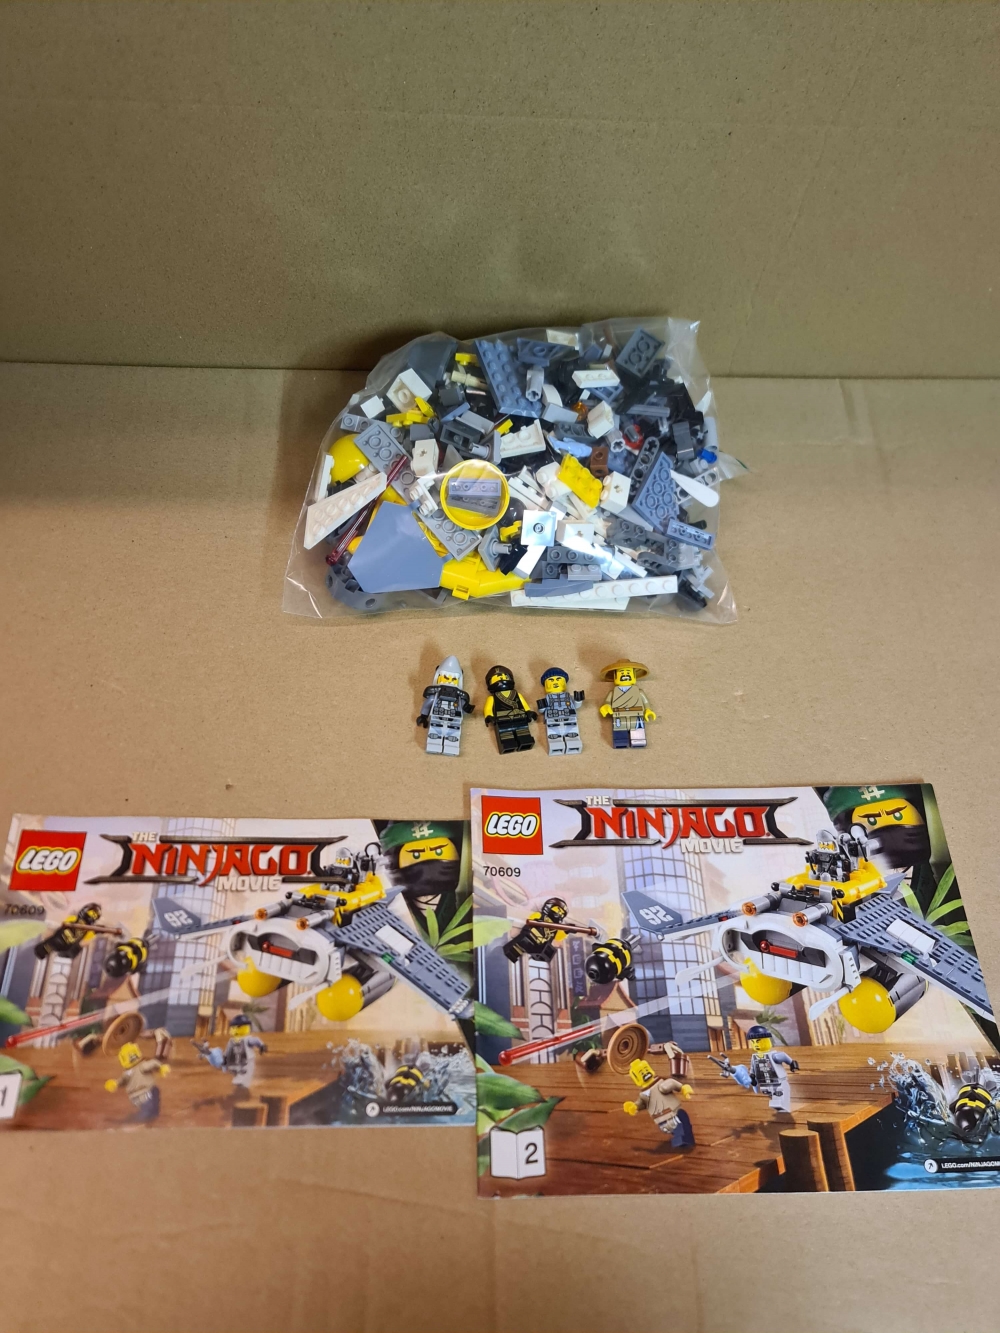 Sett 70609 fra Lego : The Ninjago Movie serien.
Meget pent.
Komplett med manualer.